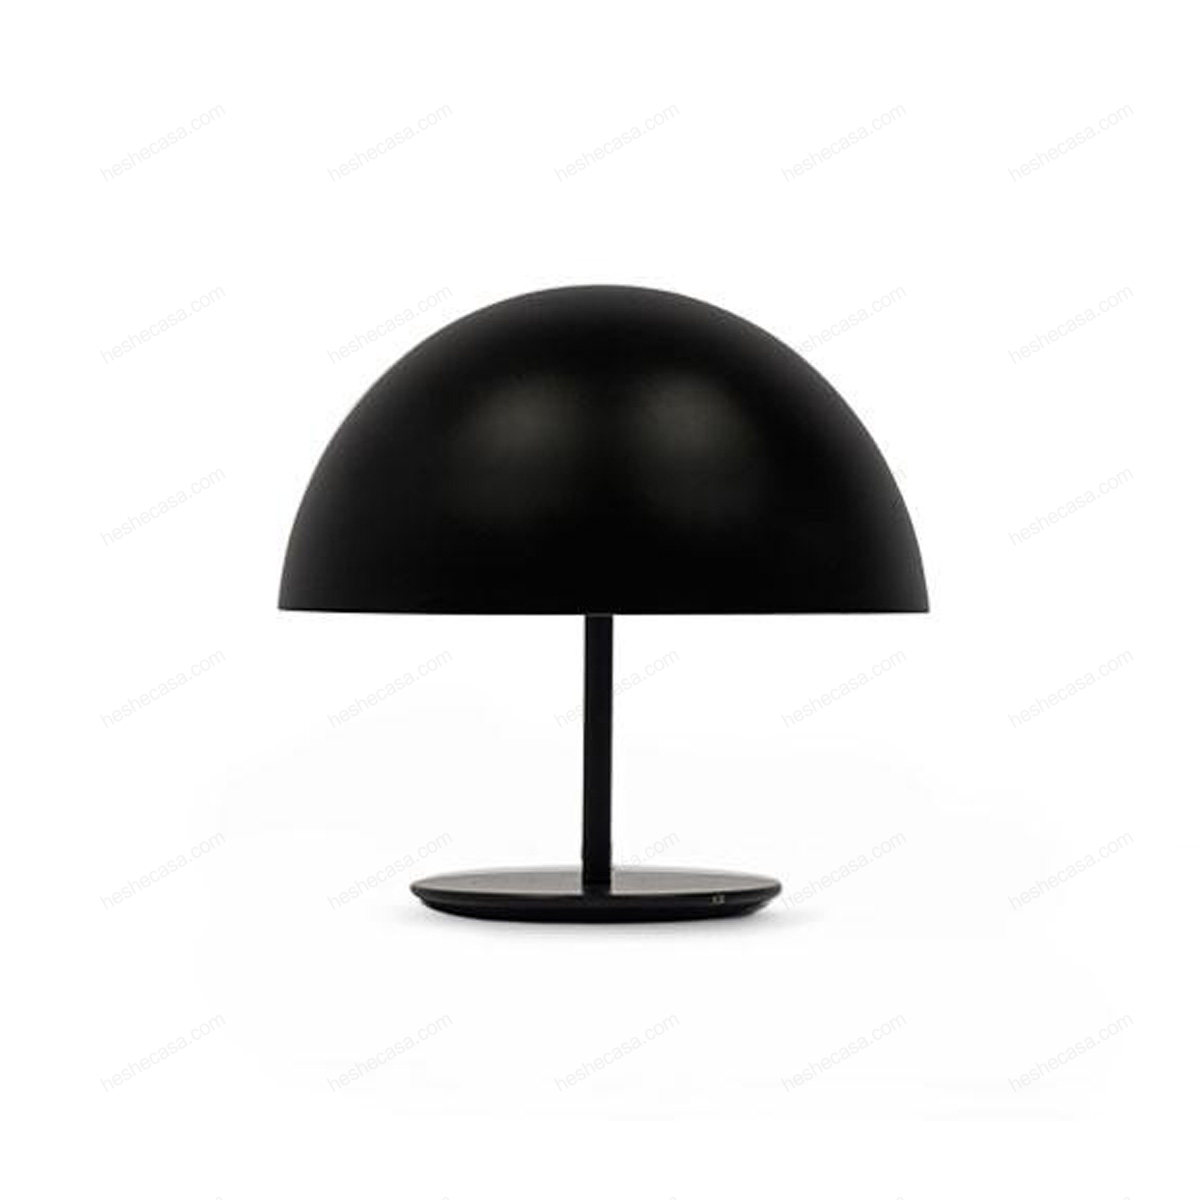 Baby Dome Lamp Black台灯